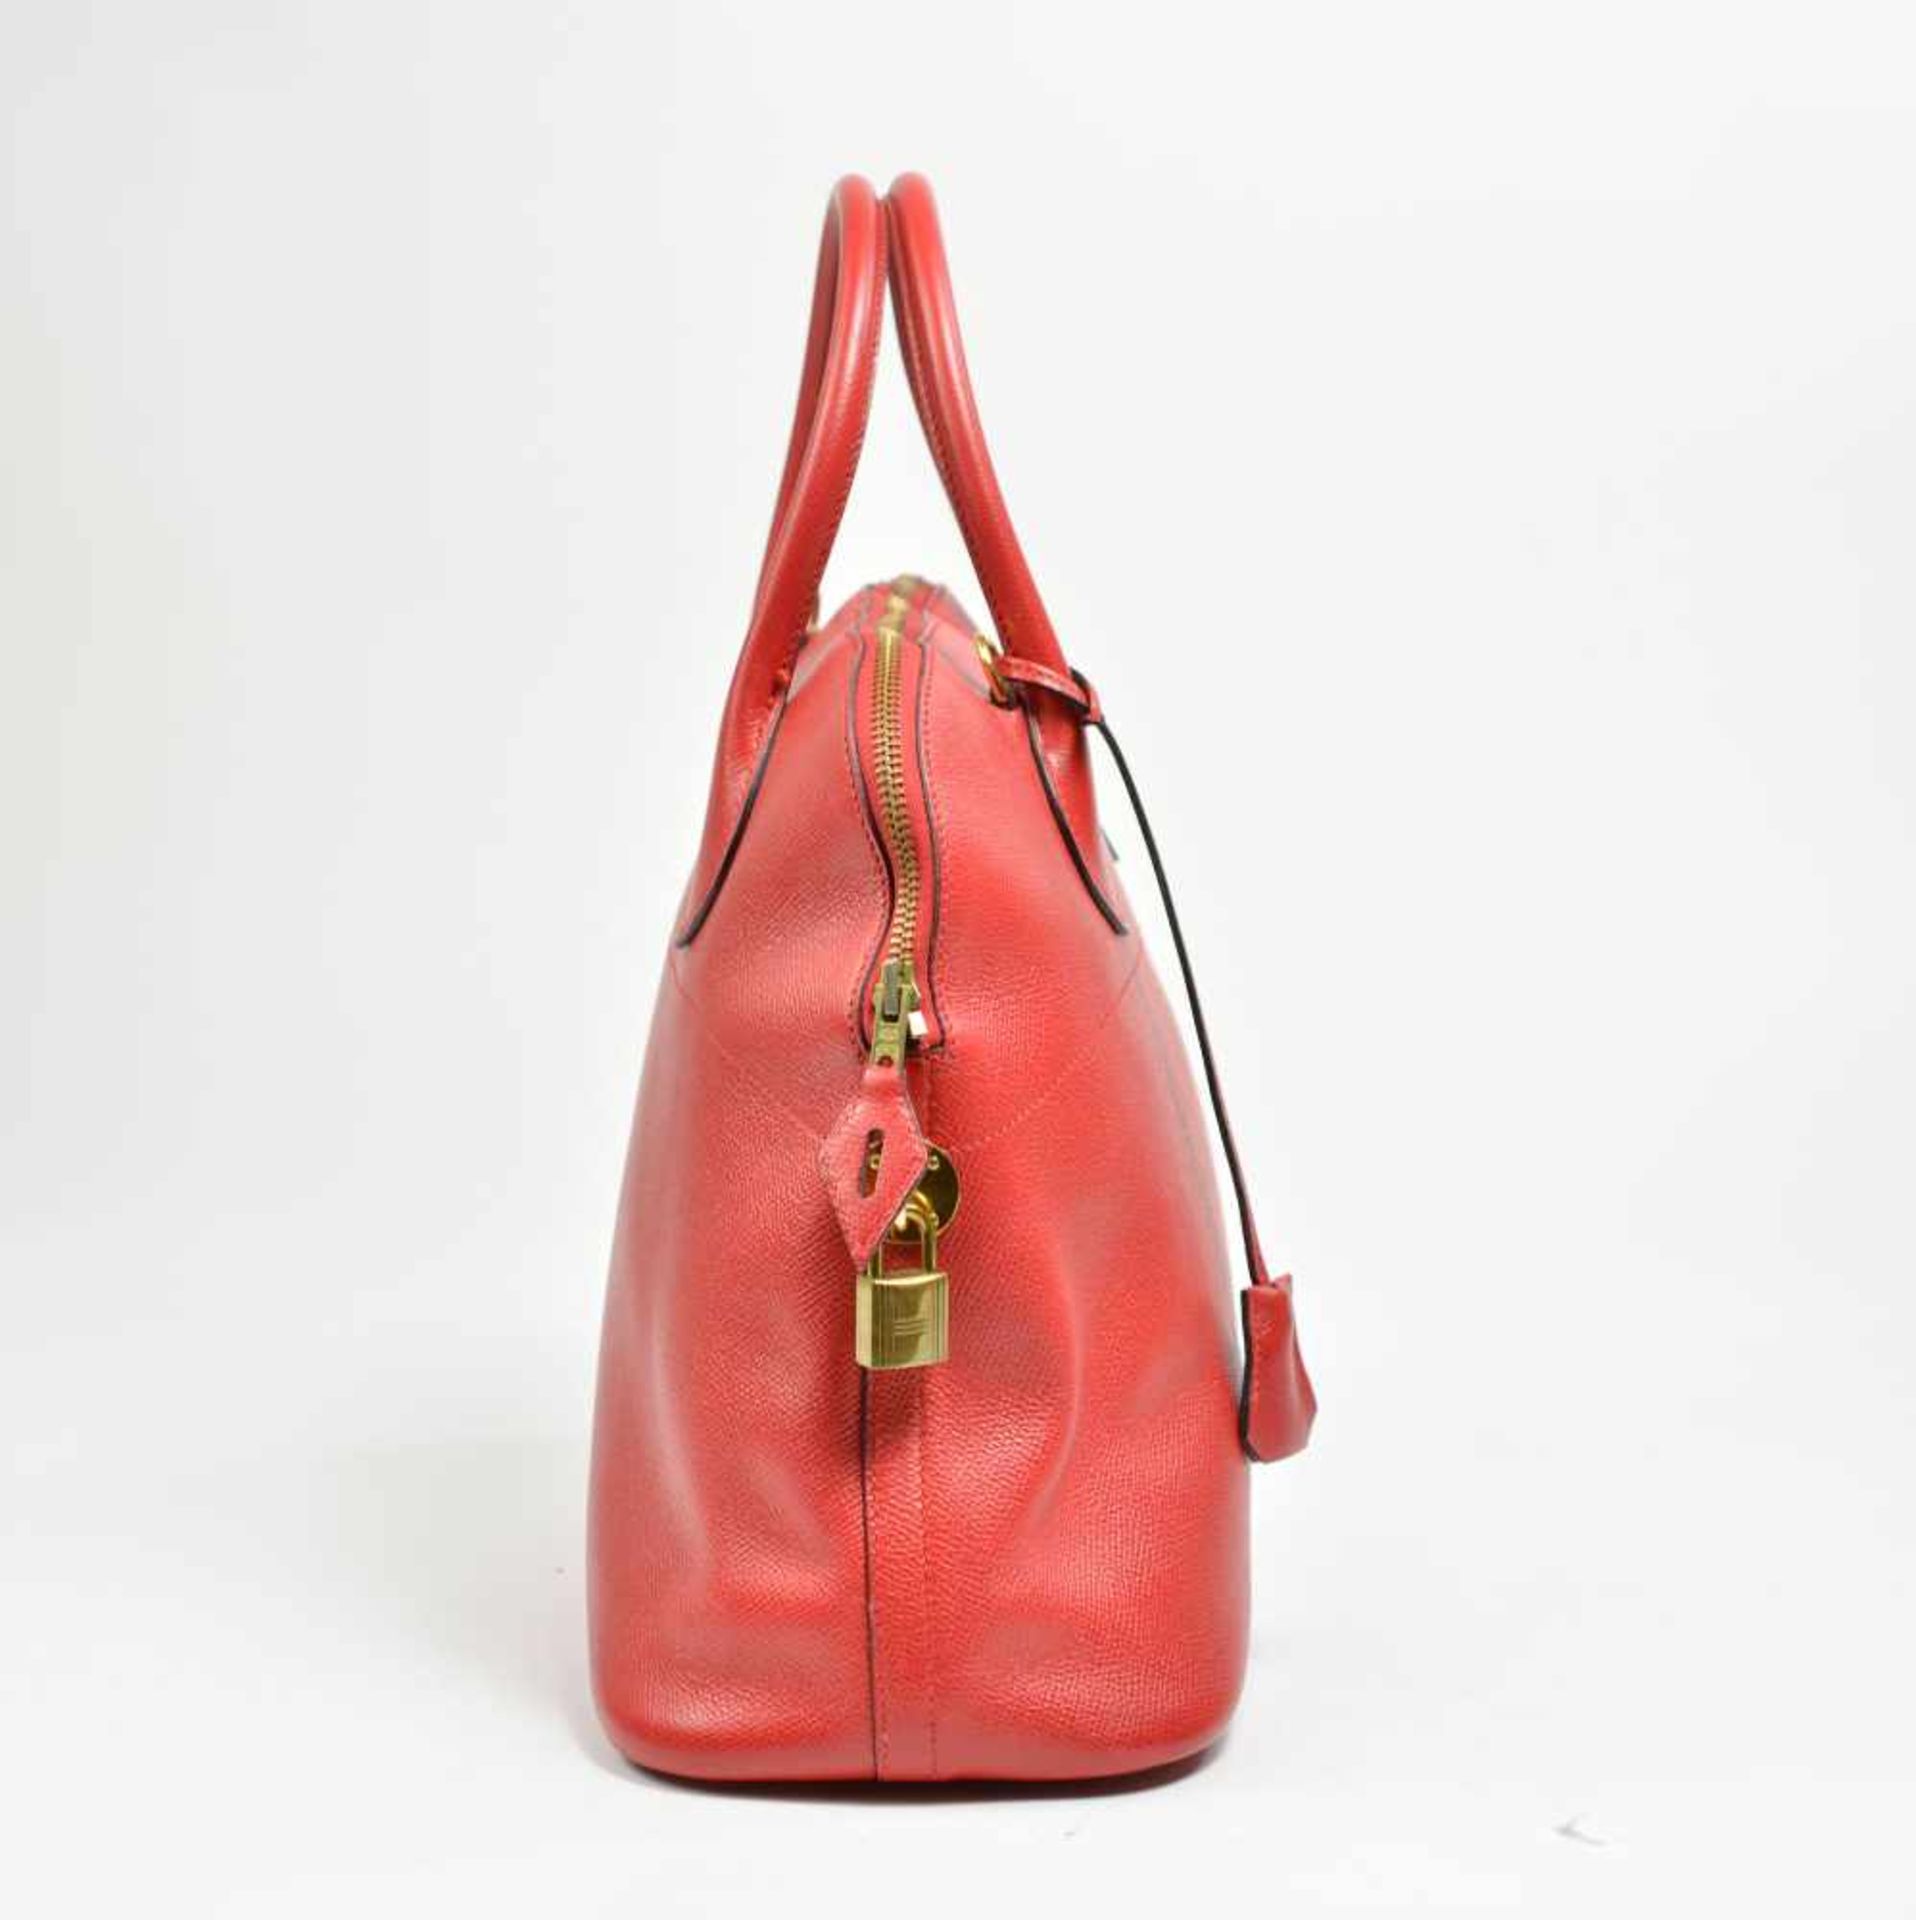 Hermès 'Bolide Bag'Paris, rotes Epsom-Leder, innen rotes Glattleder, vergoldetes Palladium, innen - Bild 3 aus 6